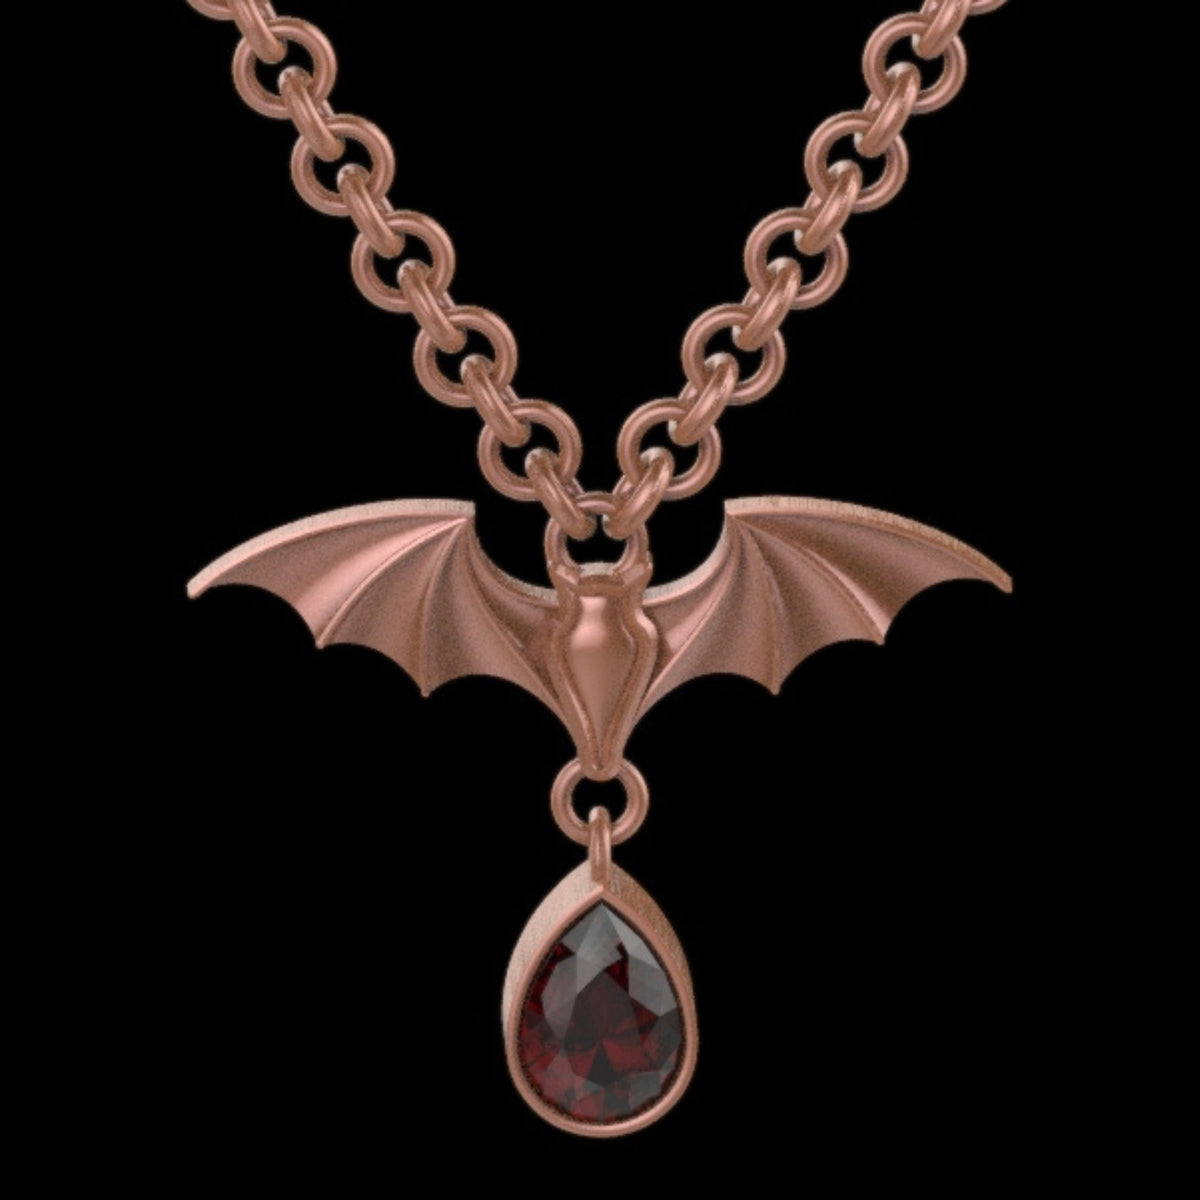 Gothic Nightfall Bat Statement Pendant with Pear-Shaped Gemstones